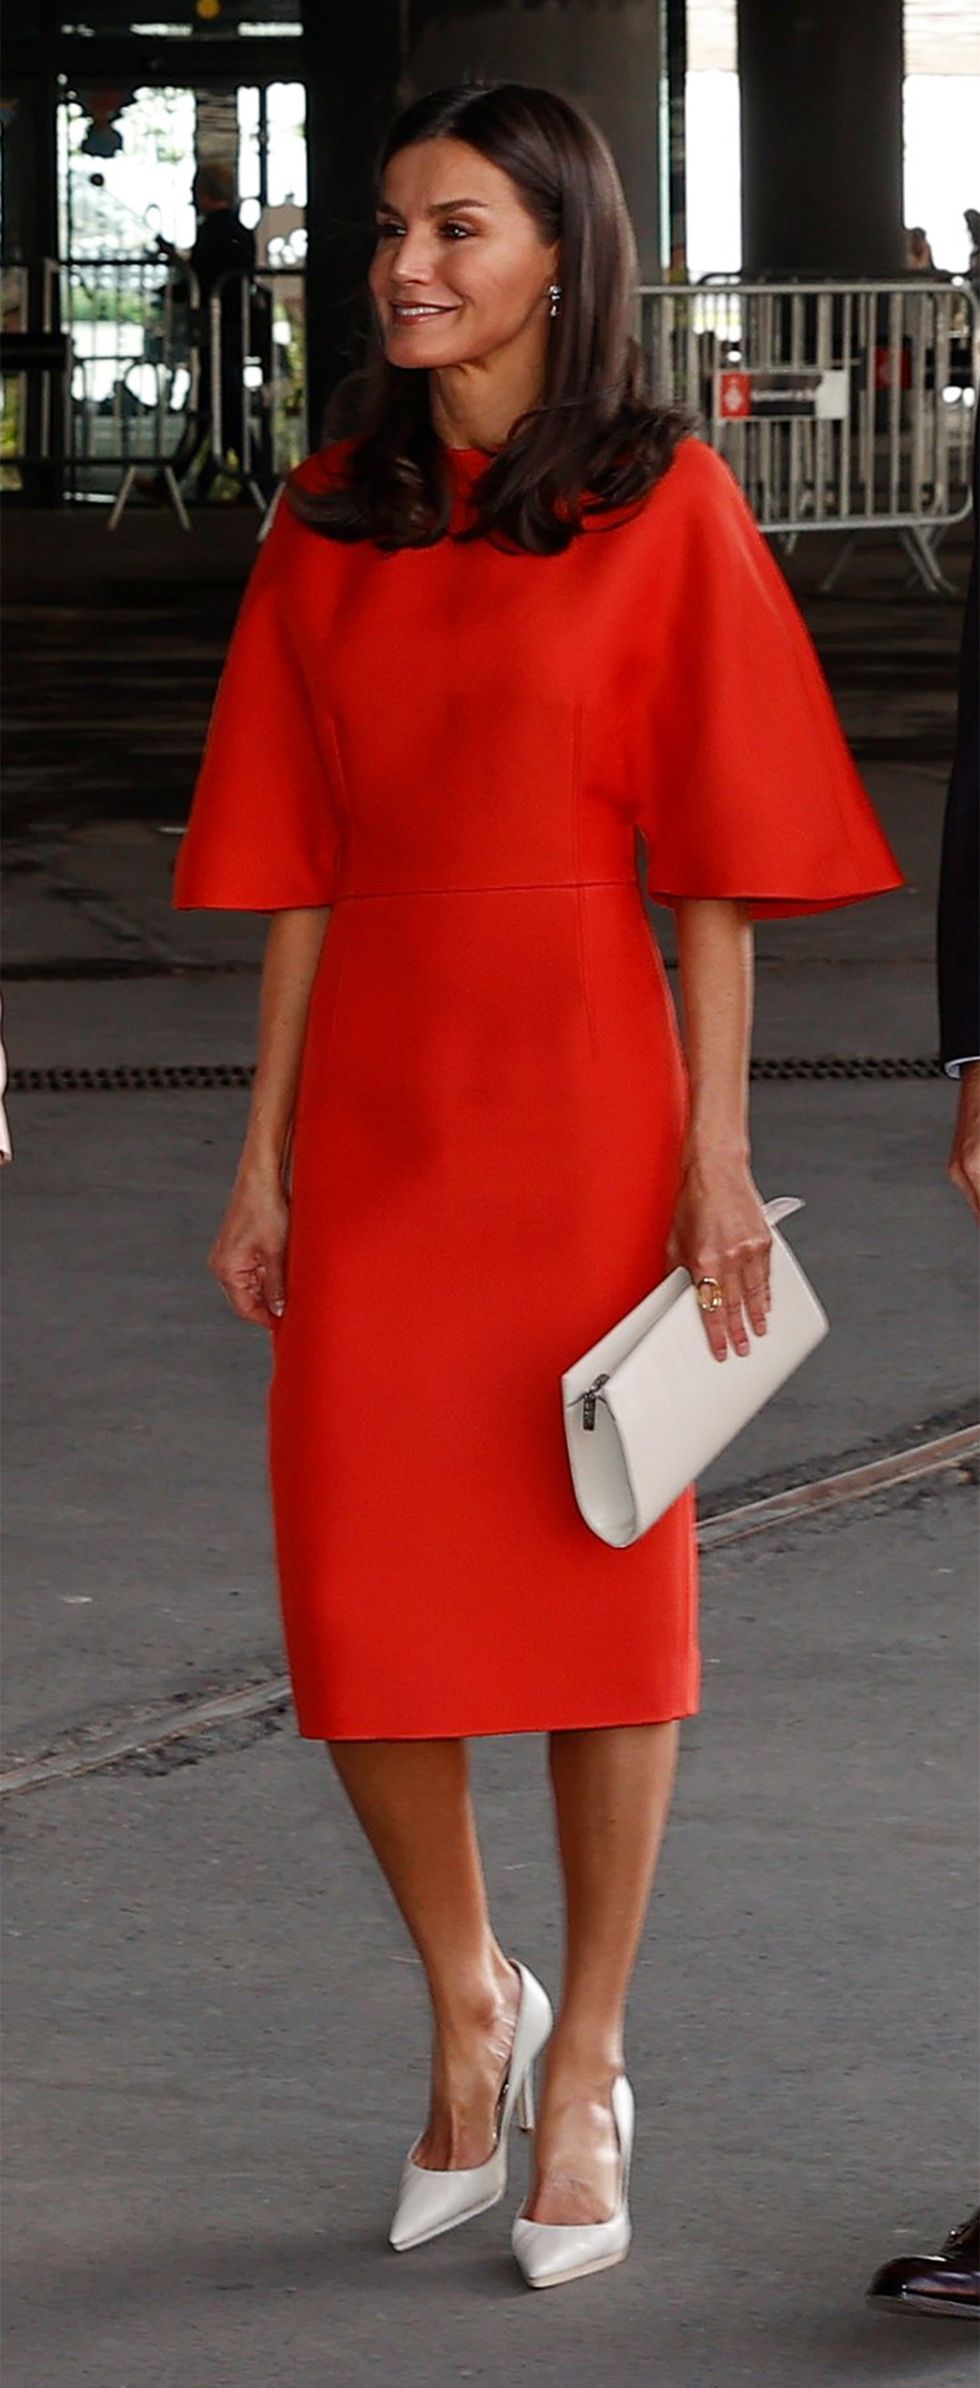 La reina Letizia: vestido rojo Carolina Herrera